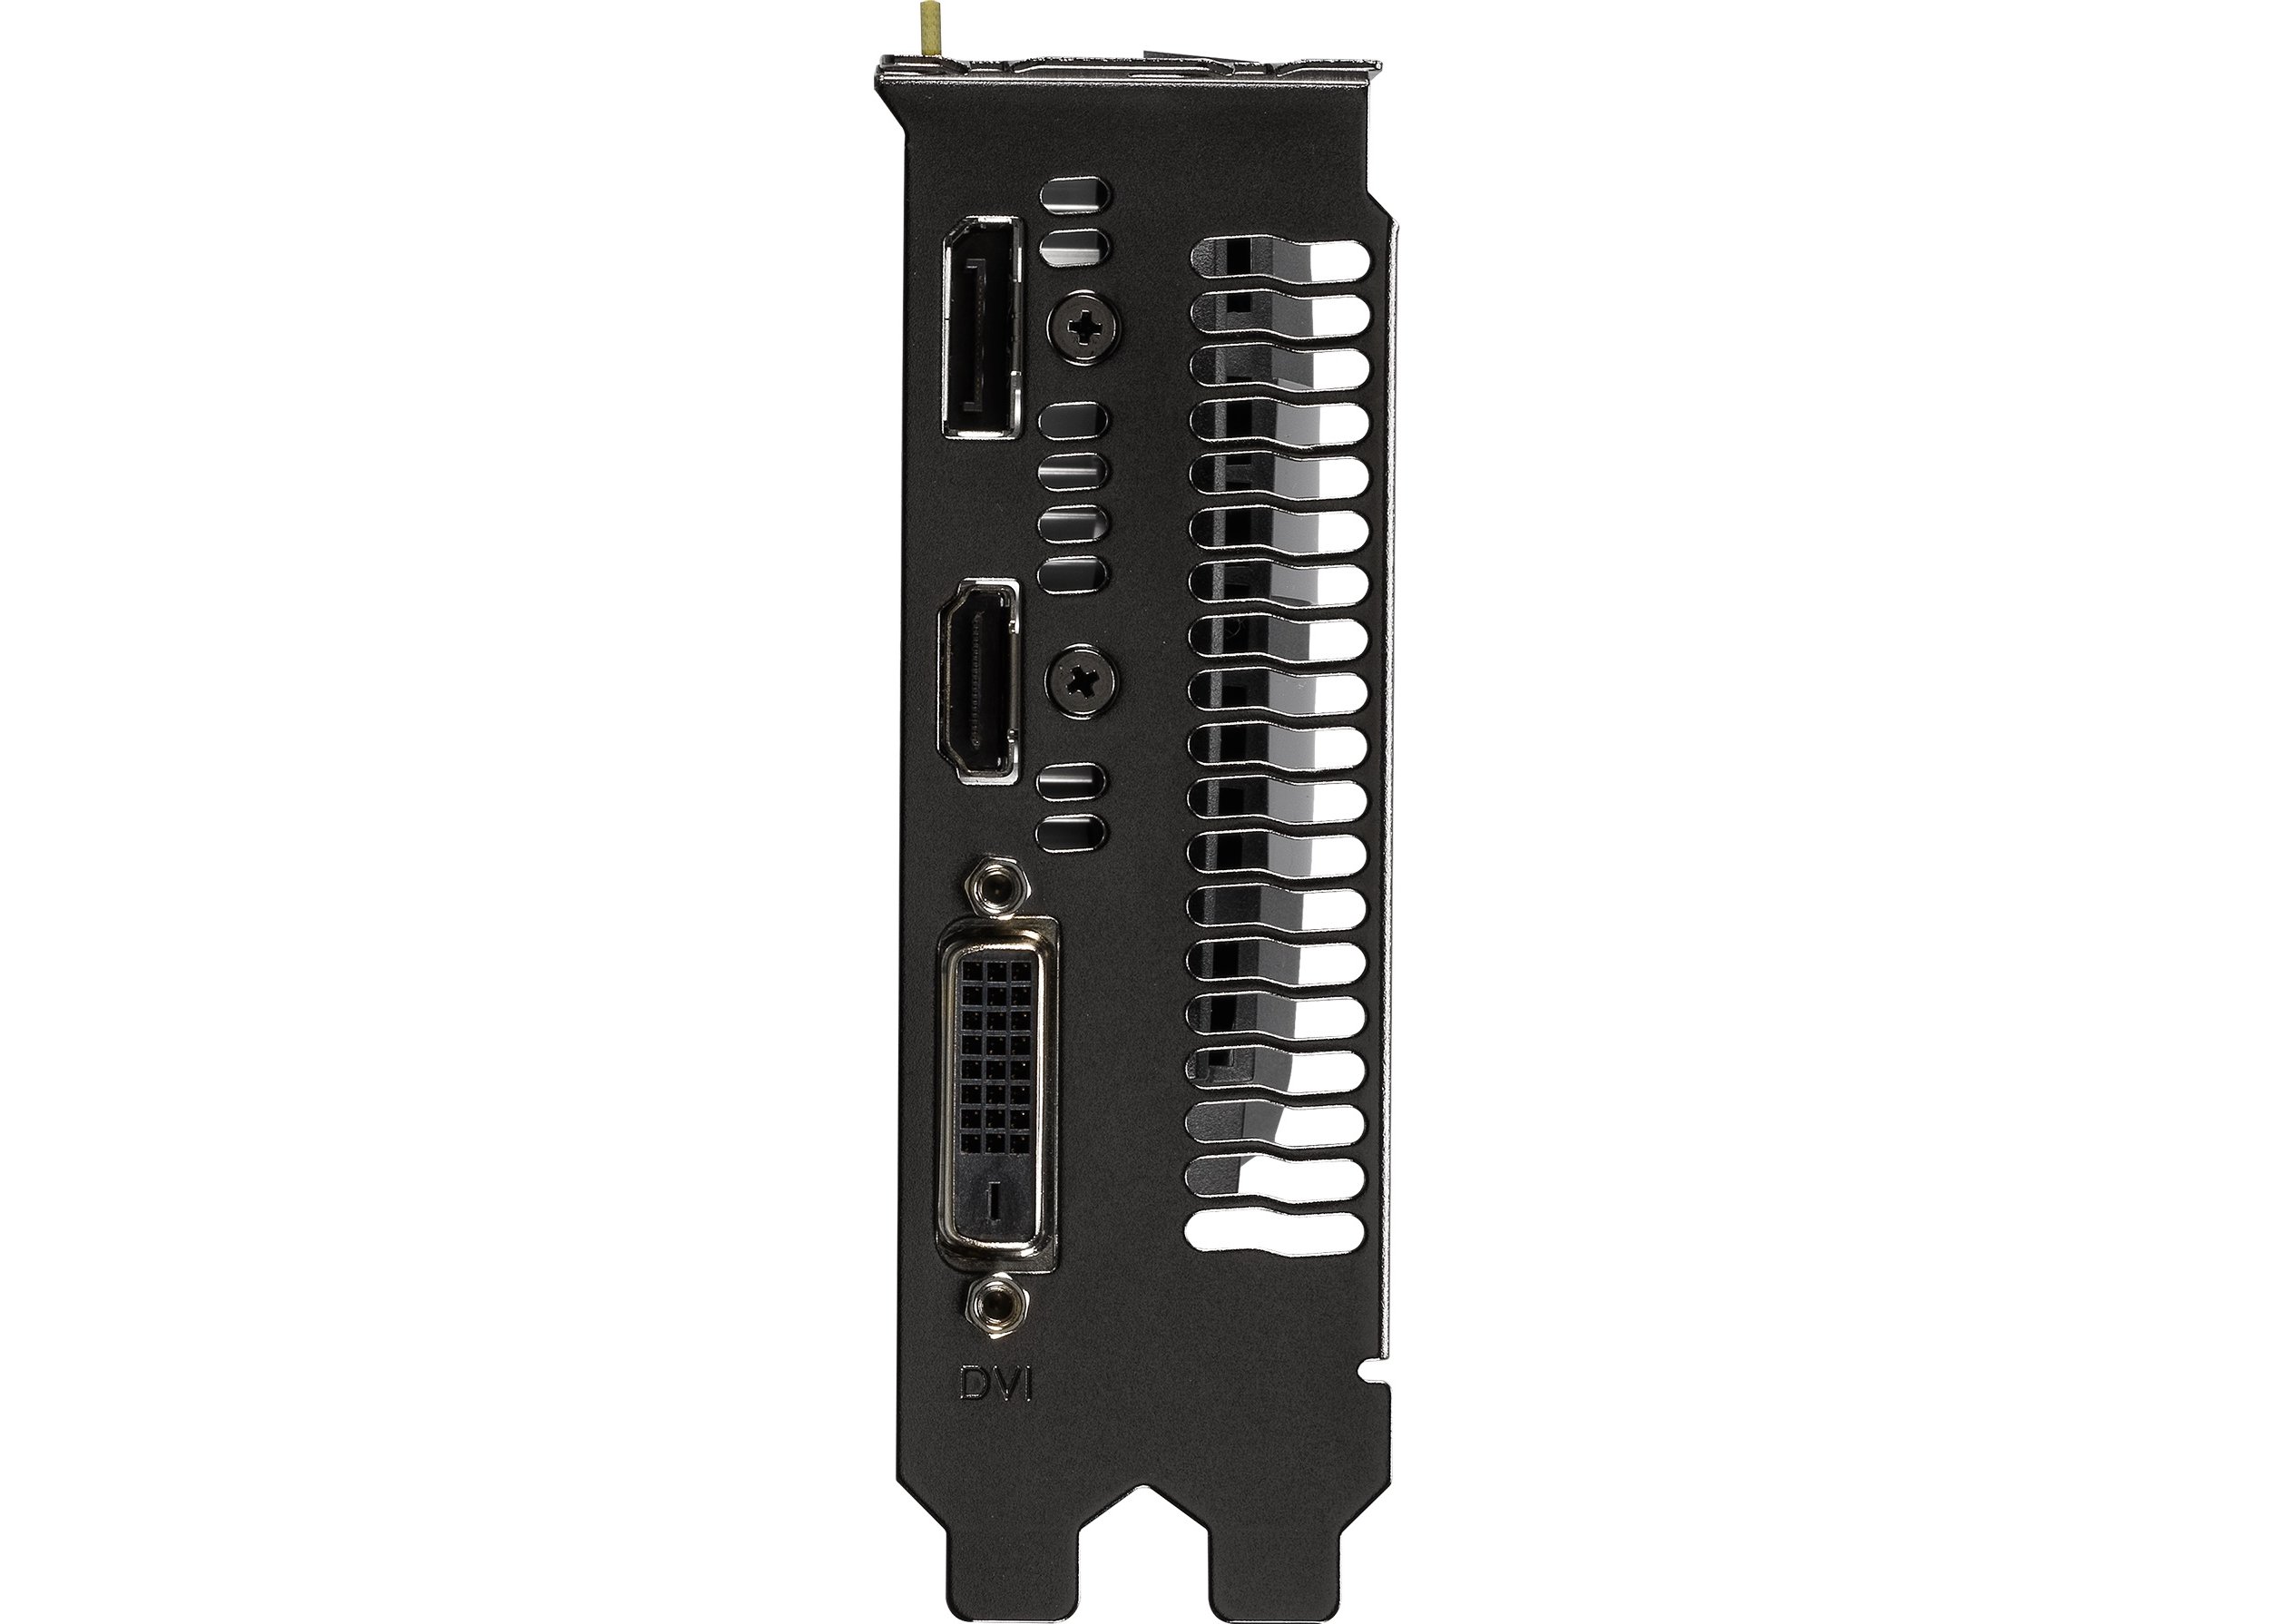 Видеокарта Asus GeForce GTX 1650 4Гб PH-GTX1650-O4G (GeForce GTX 1650/ DDR5/ DVI/ HDMI/ DP) PCI-E